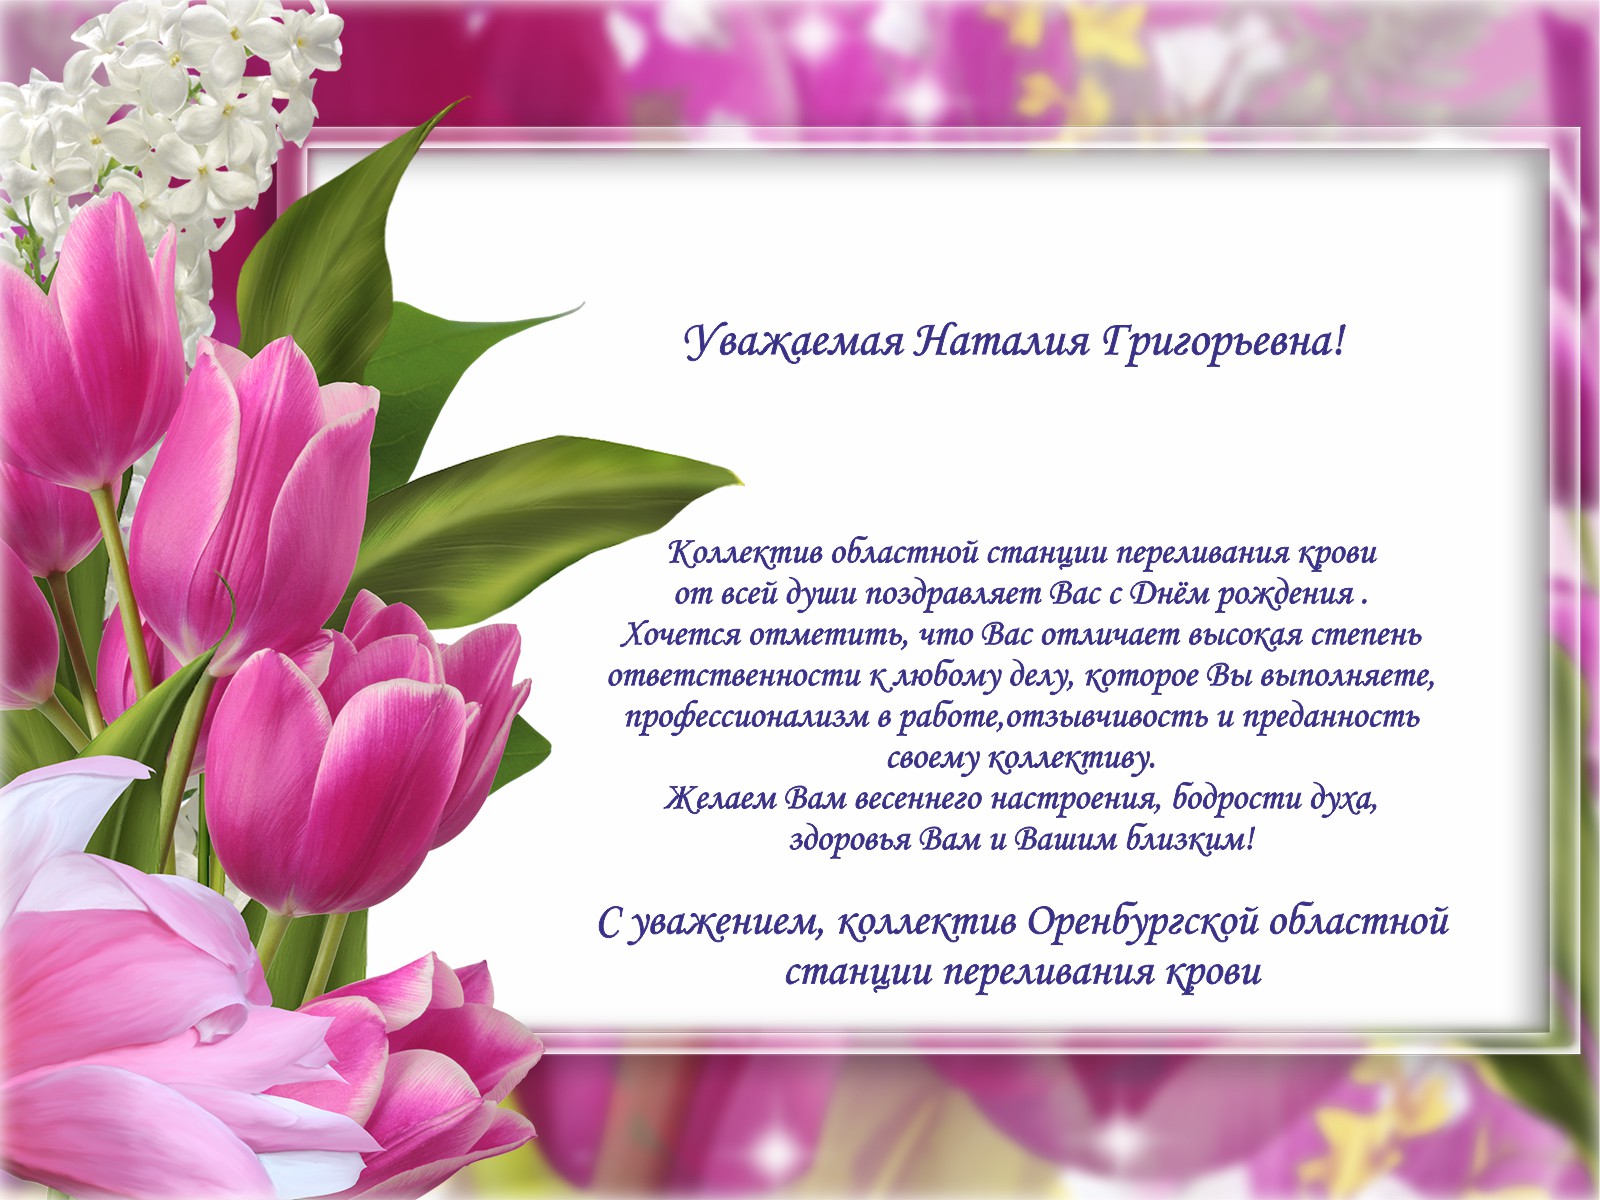 Поздравление с Днем рождения от коллектива ГБУЗ "ООКСПК"